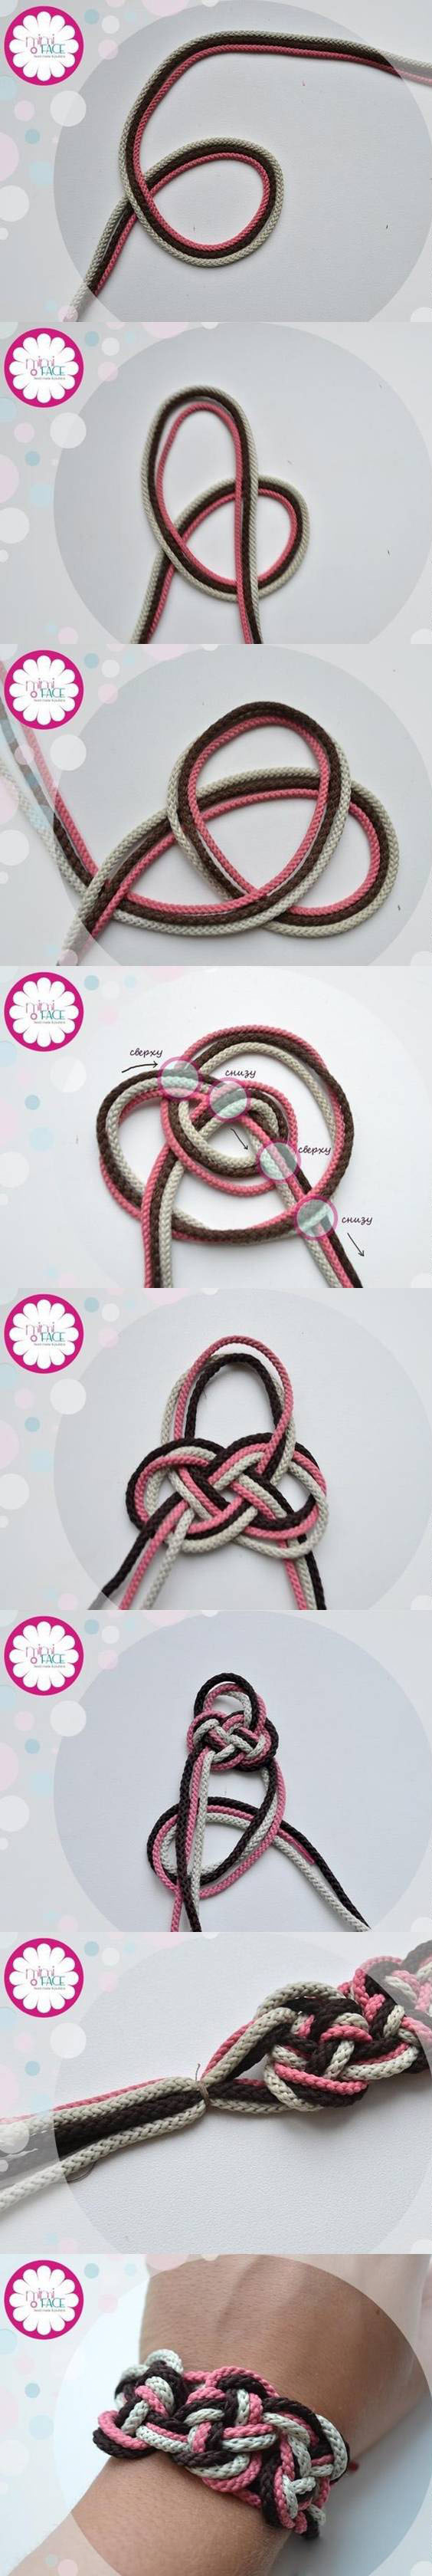 DIY-Multi-color-Bracelet11